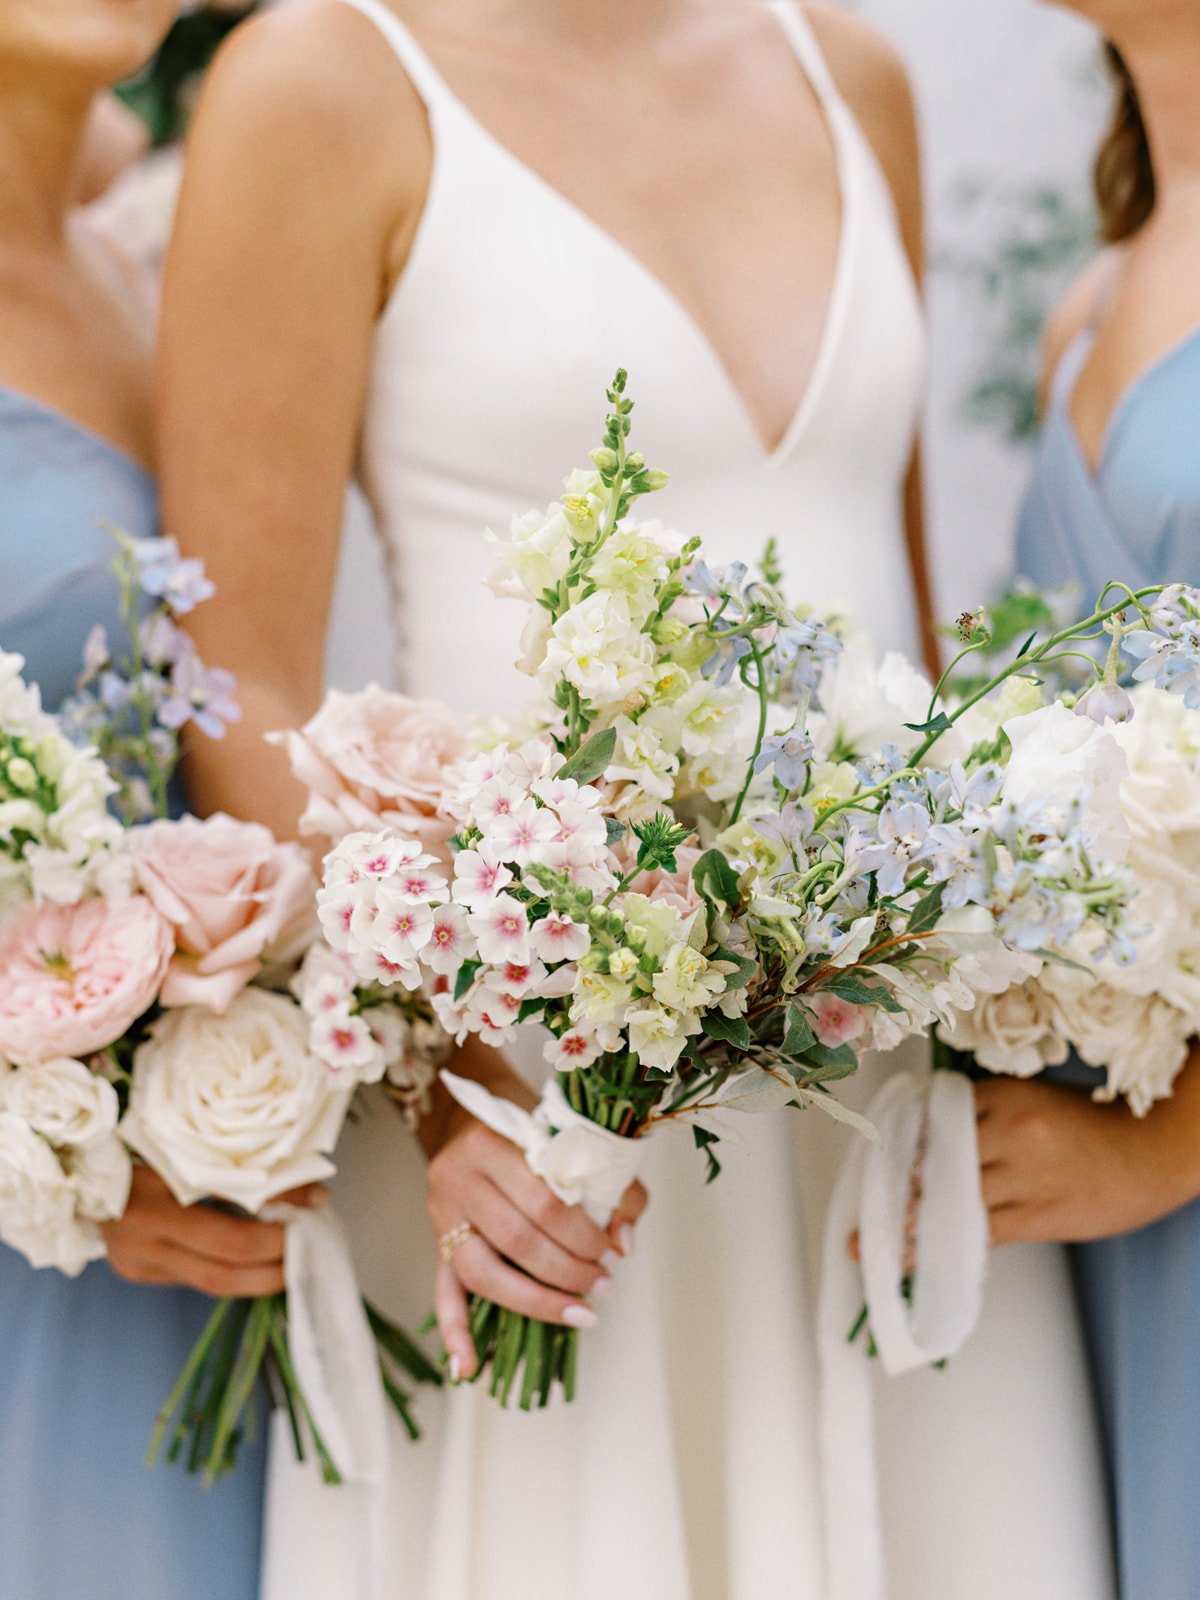 Florals by a Northern Michigan wedding planner and designer